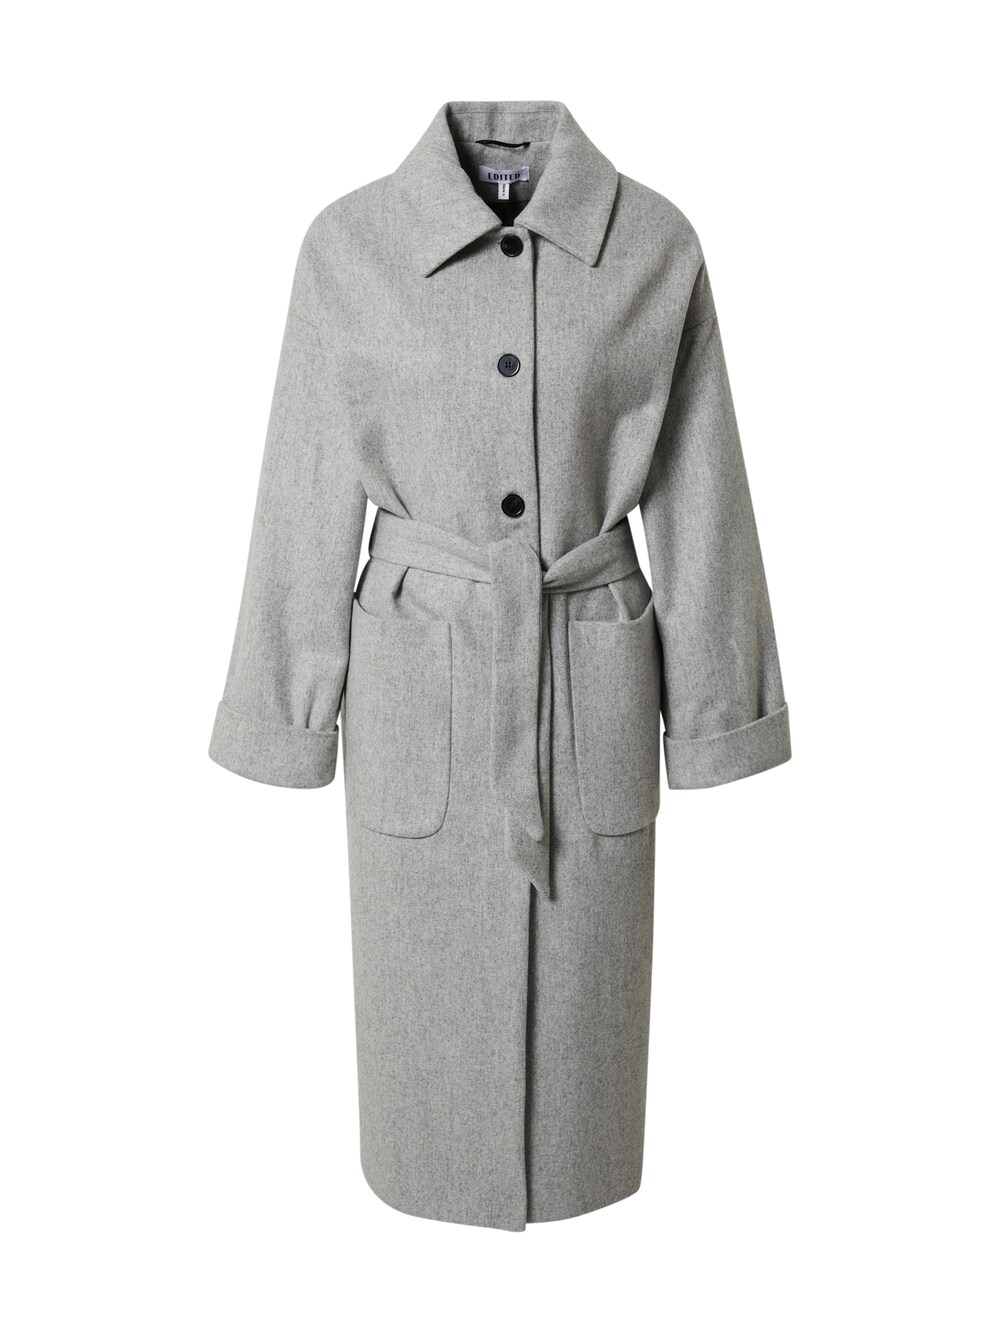 Межсезонное пальто EDITED Tosca, пестрый серый межсезонное пальто edited tosca пестрый серый